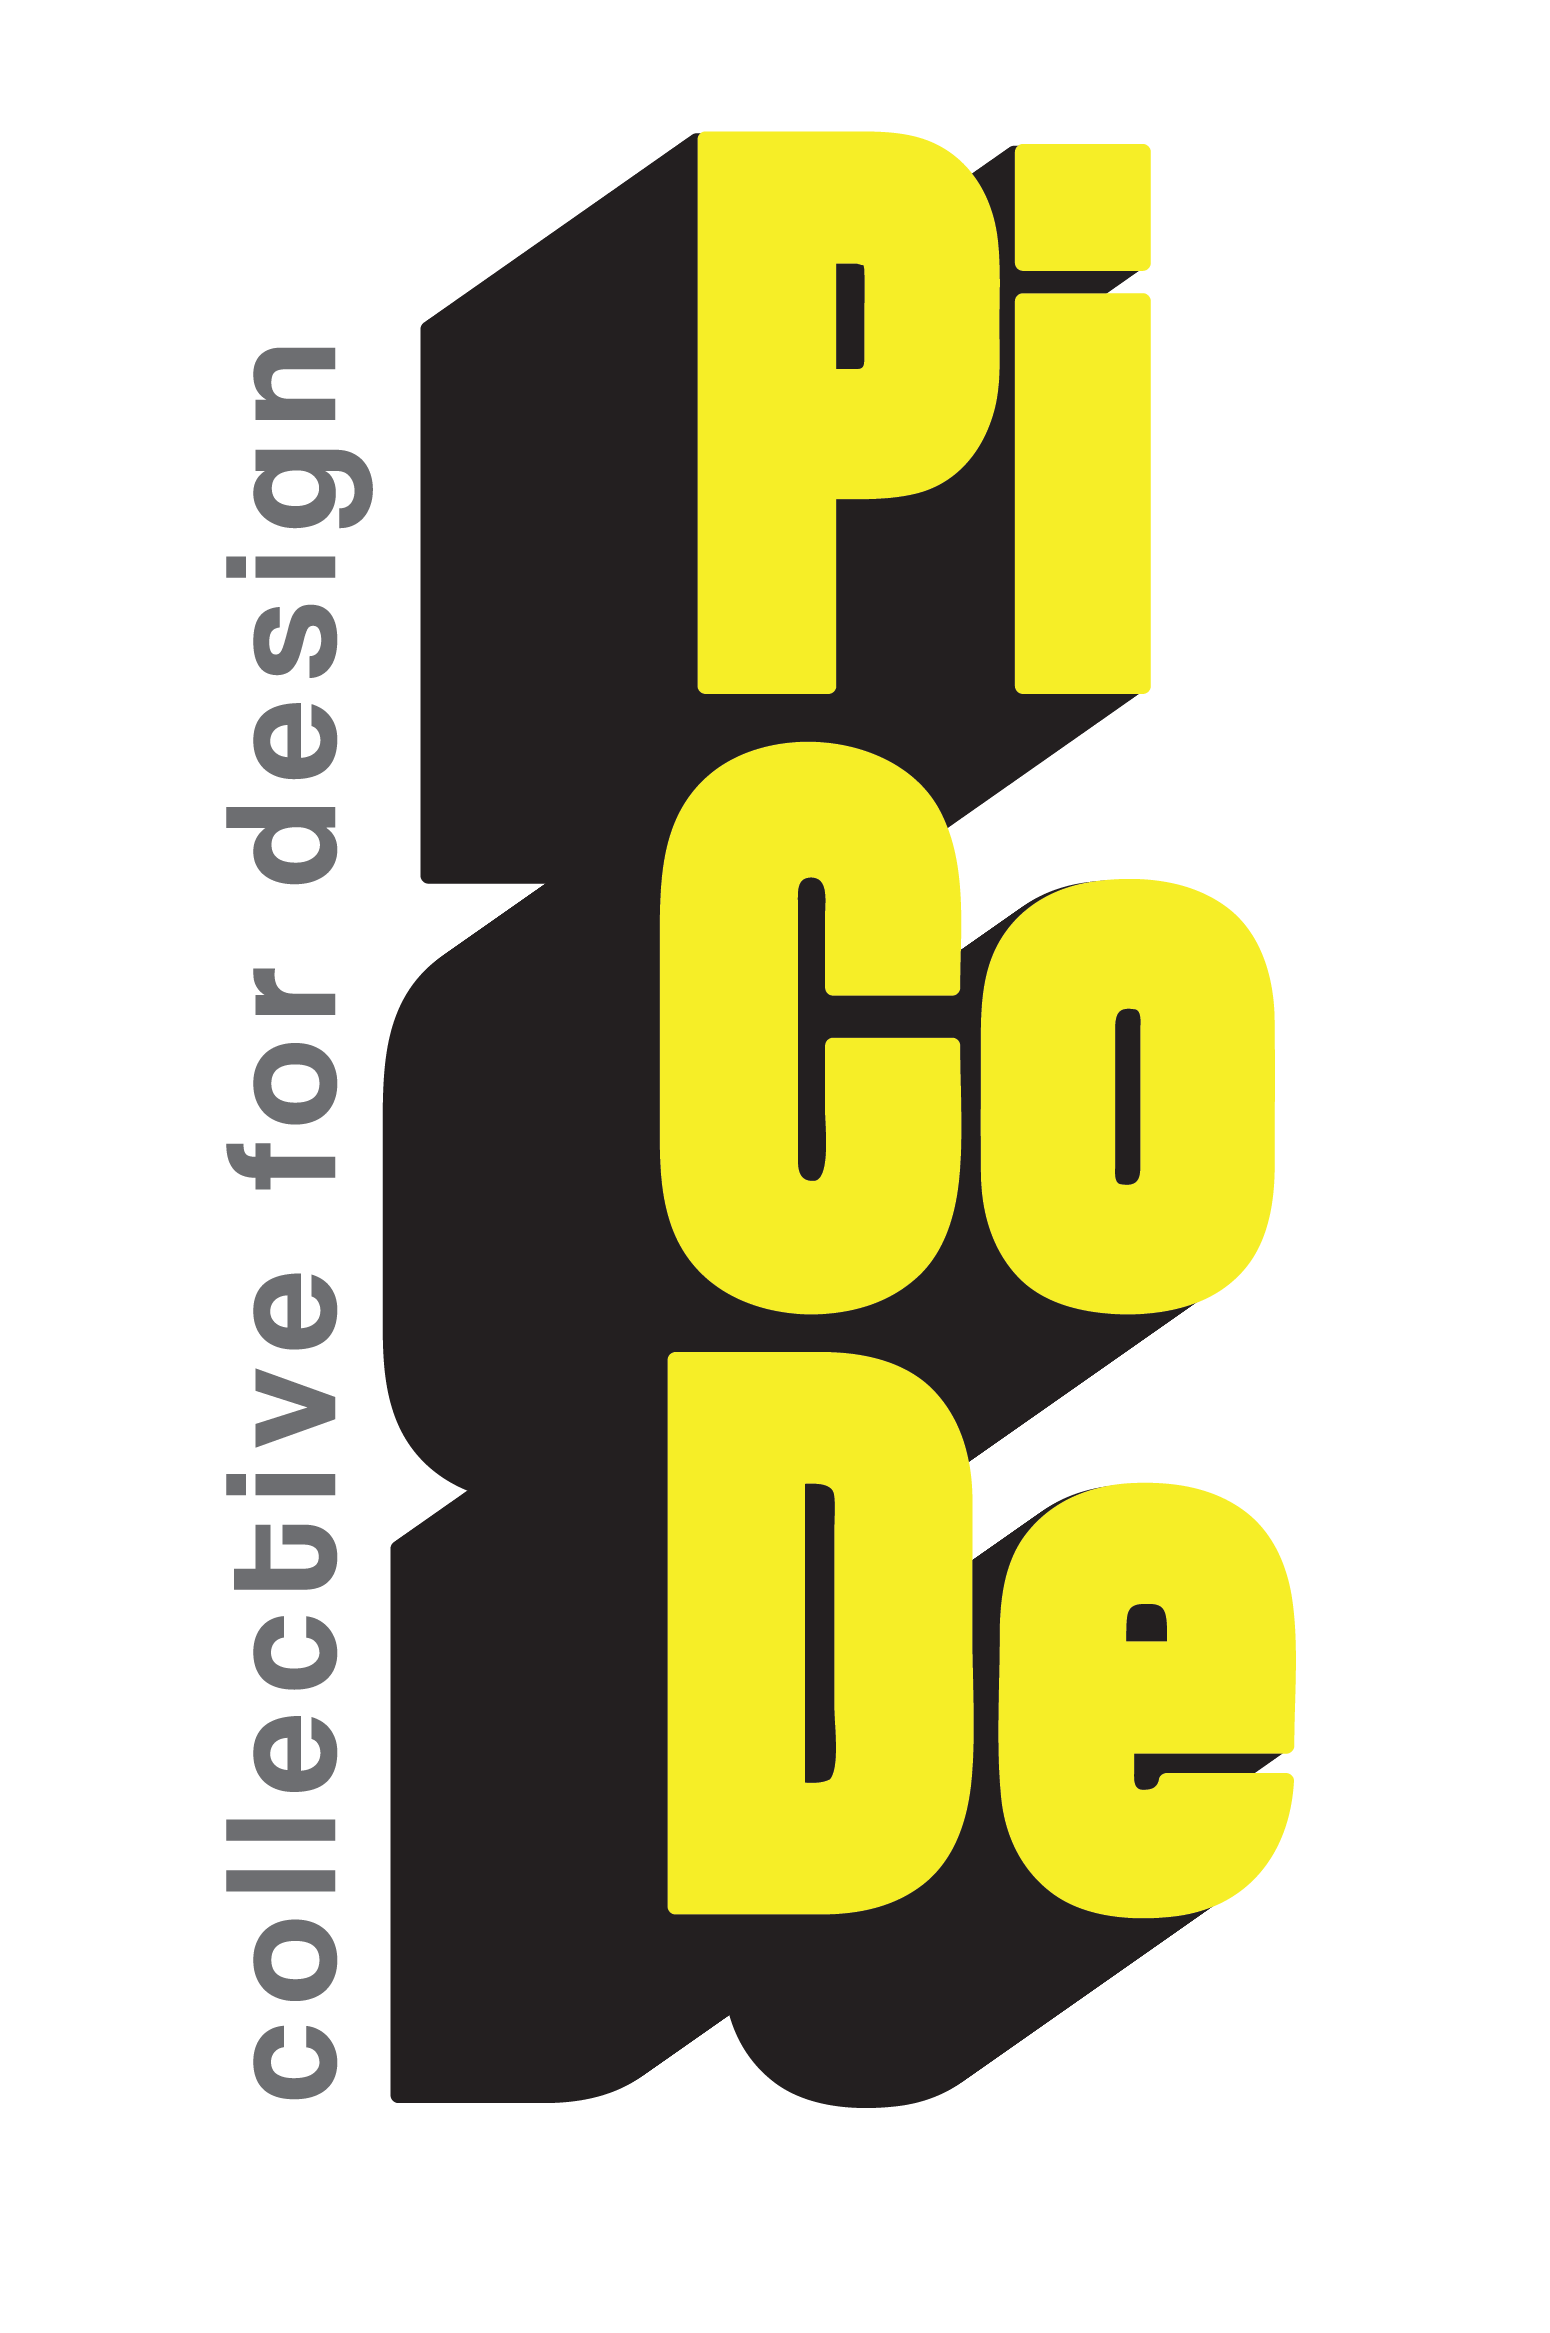 Logo projektu PiCoDe - duże żółte litery Pi Co De